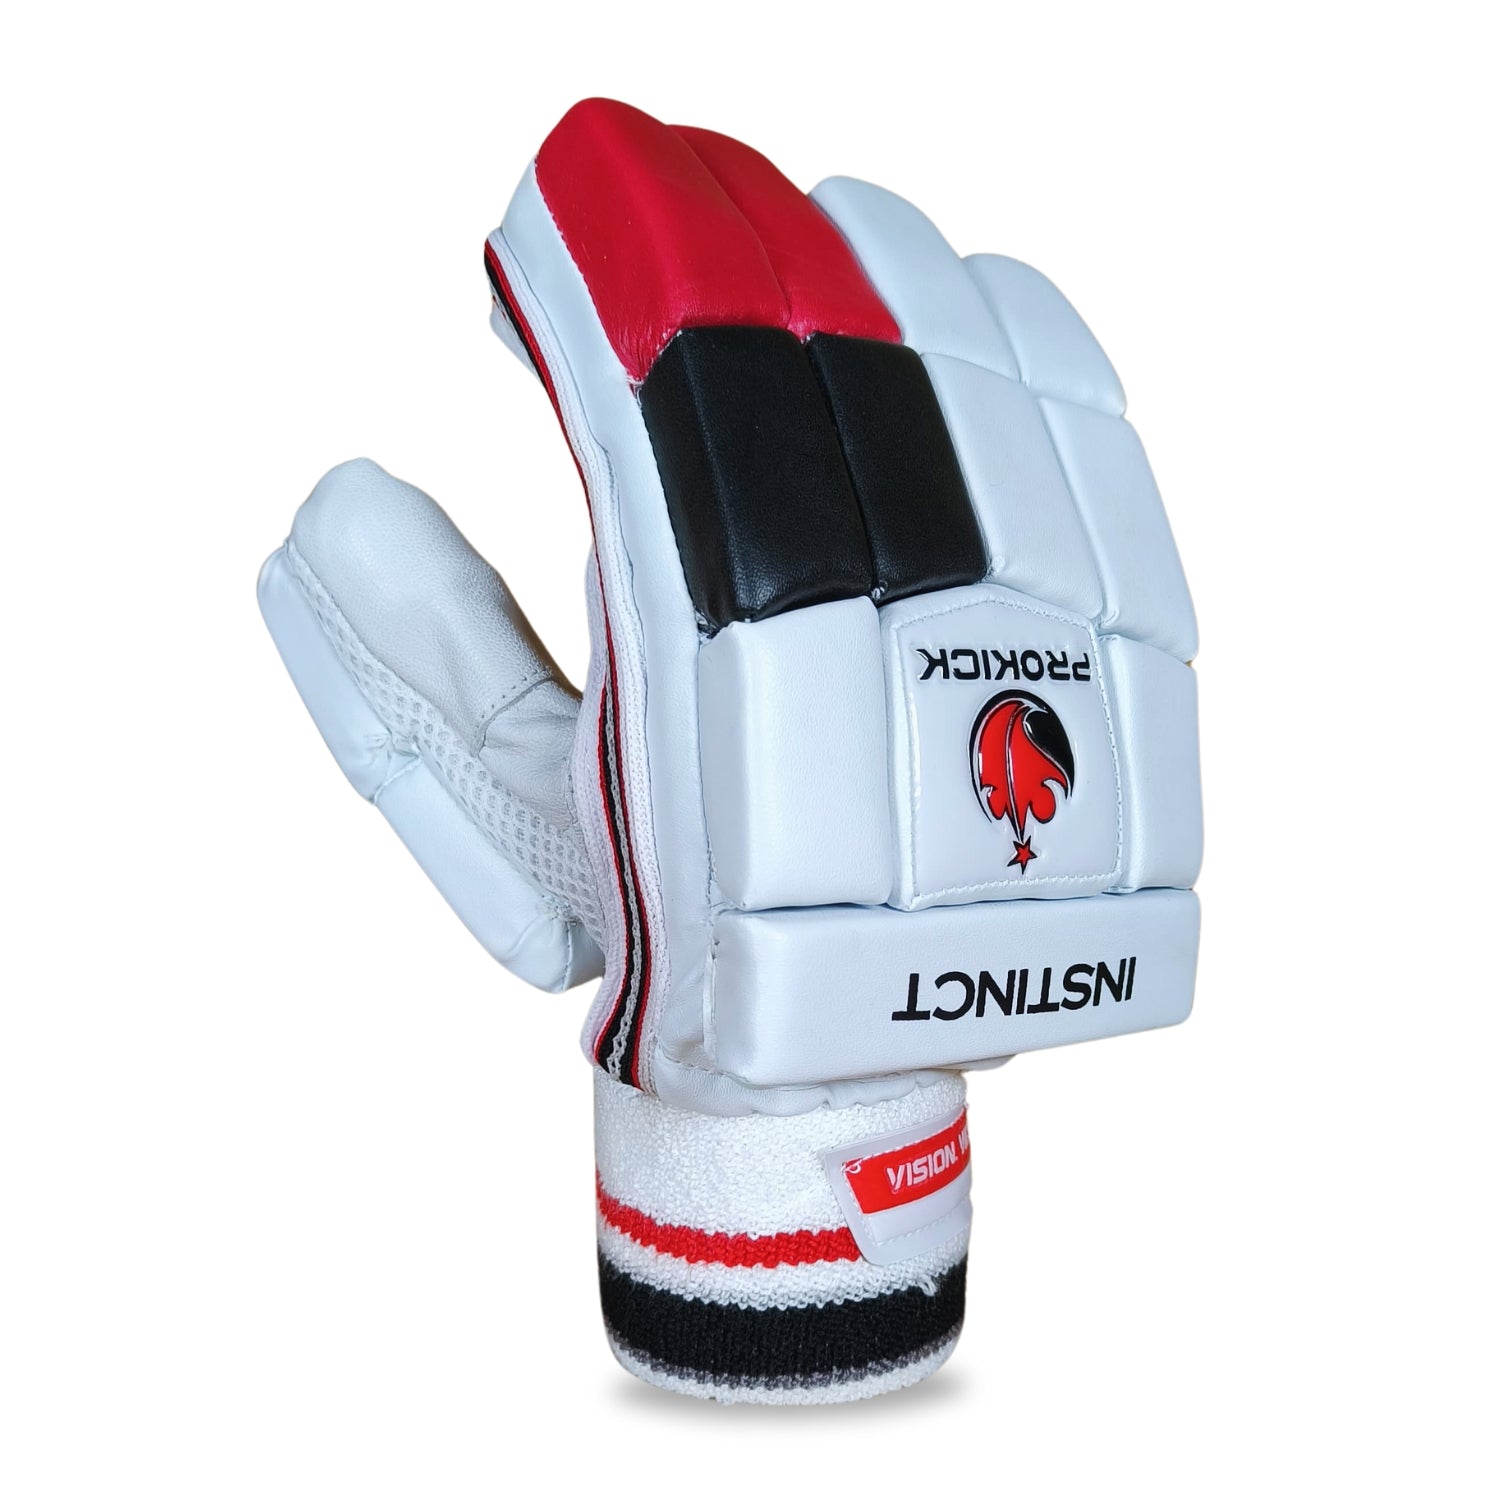 Prokick Instinct RH Cricket Batting Gloves - Best Price online Prokicksports.com